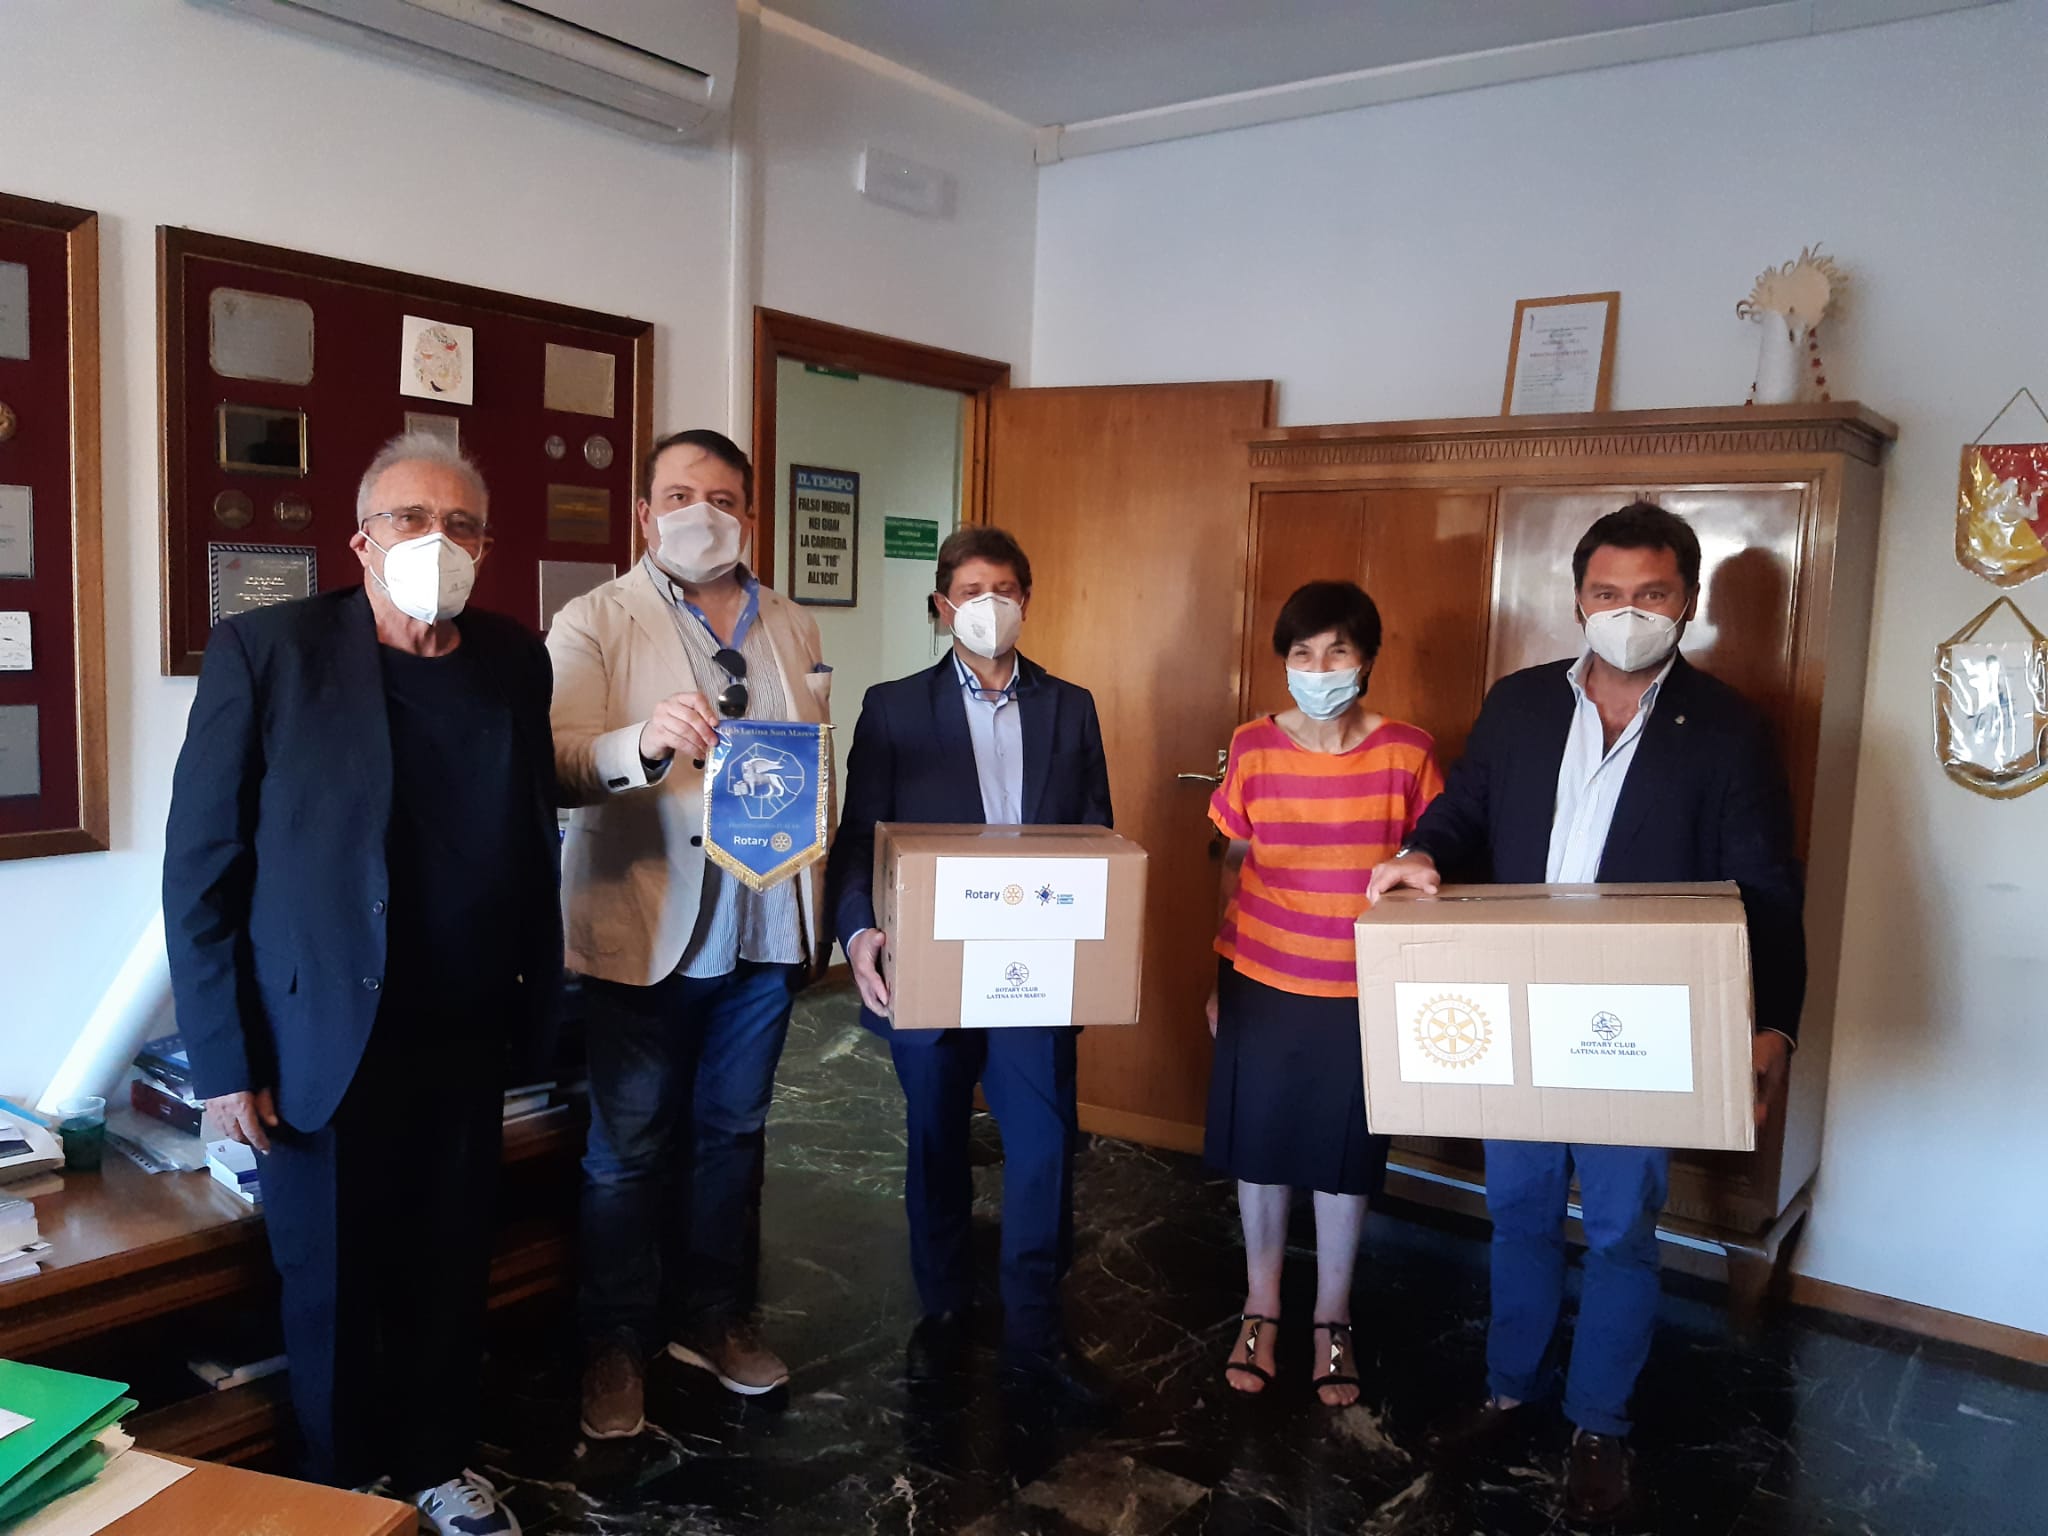 Rotary Club Latina San Marco dona Mascherine e visiere all’ODM di Latina